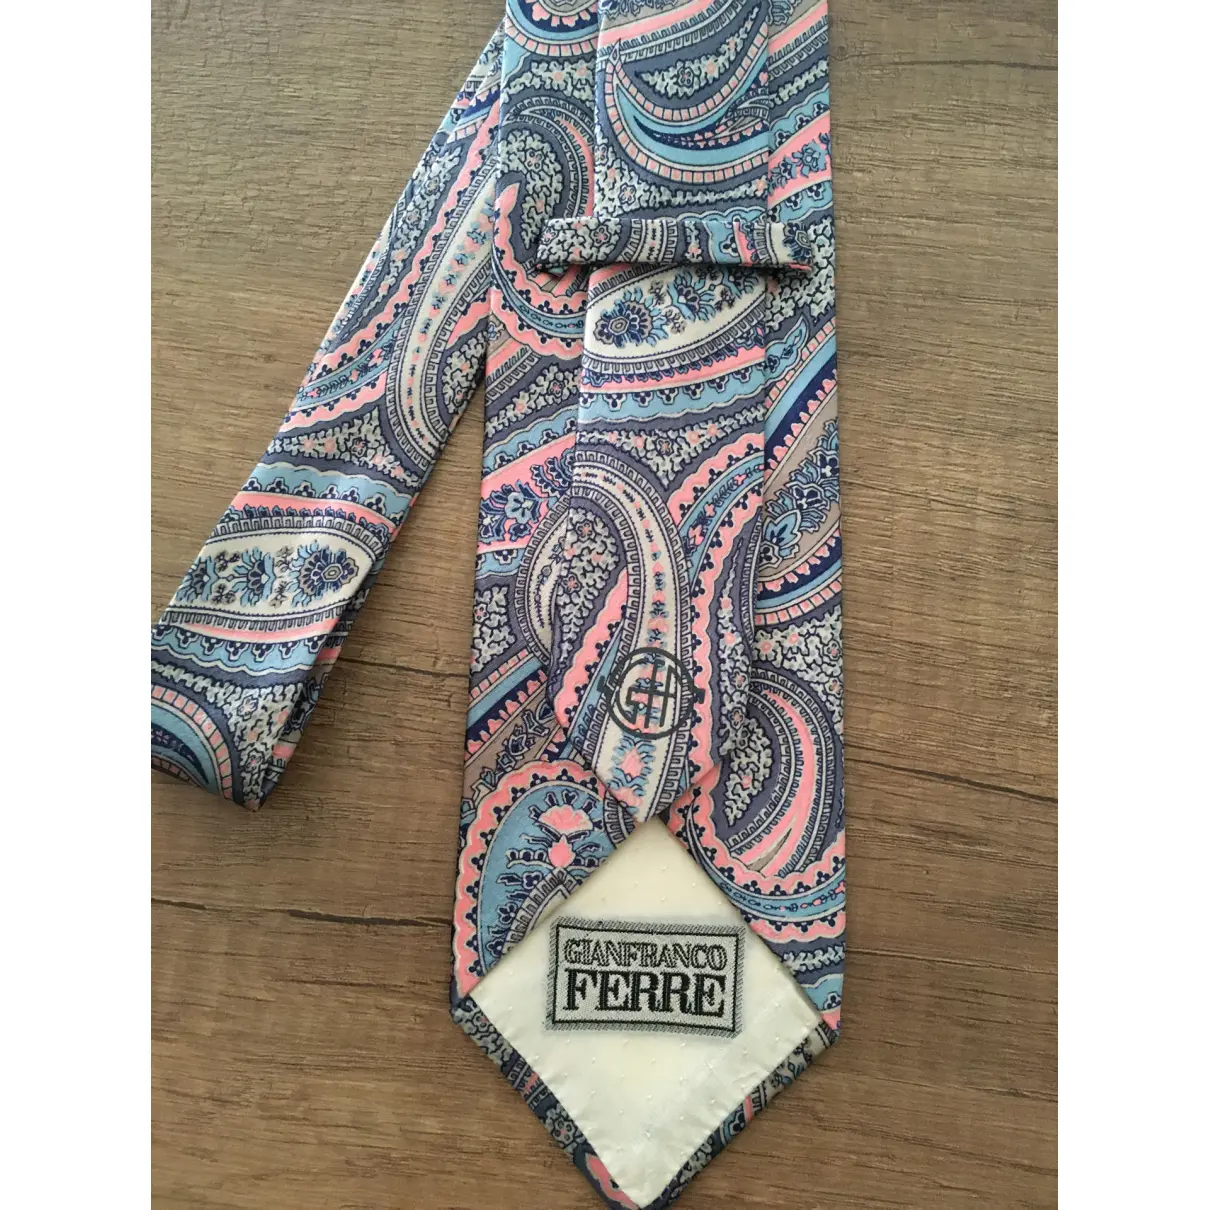 Buy Gianfranco Ferré Silk tie online